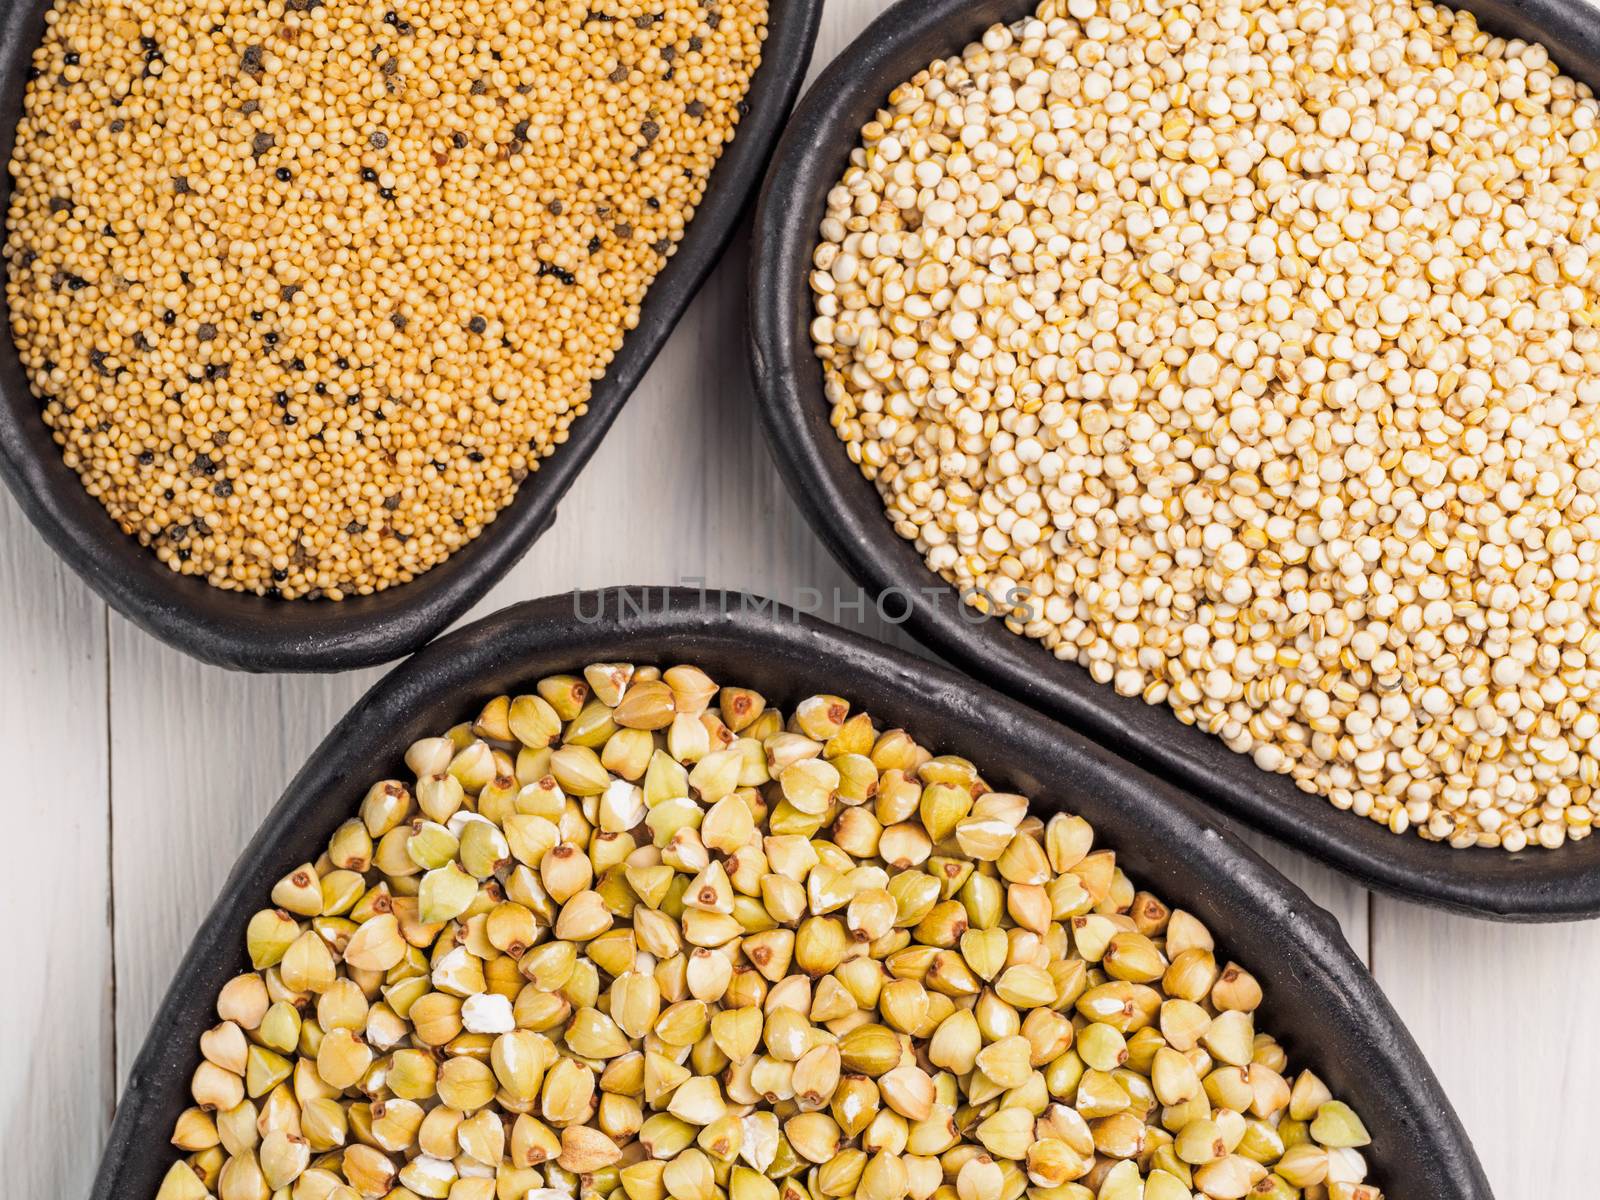 Green buckwheat, amaranth seeds and quinoa by fascinadora